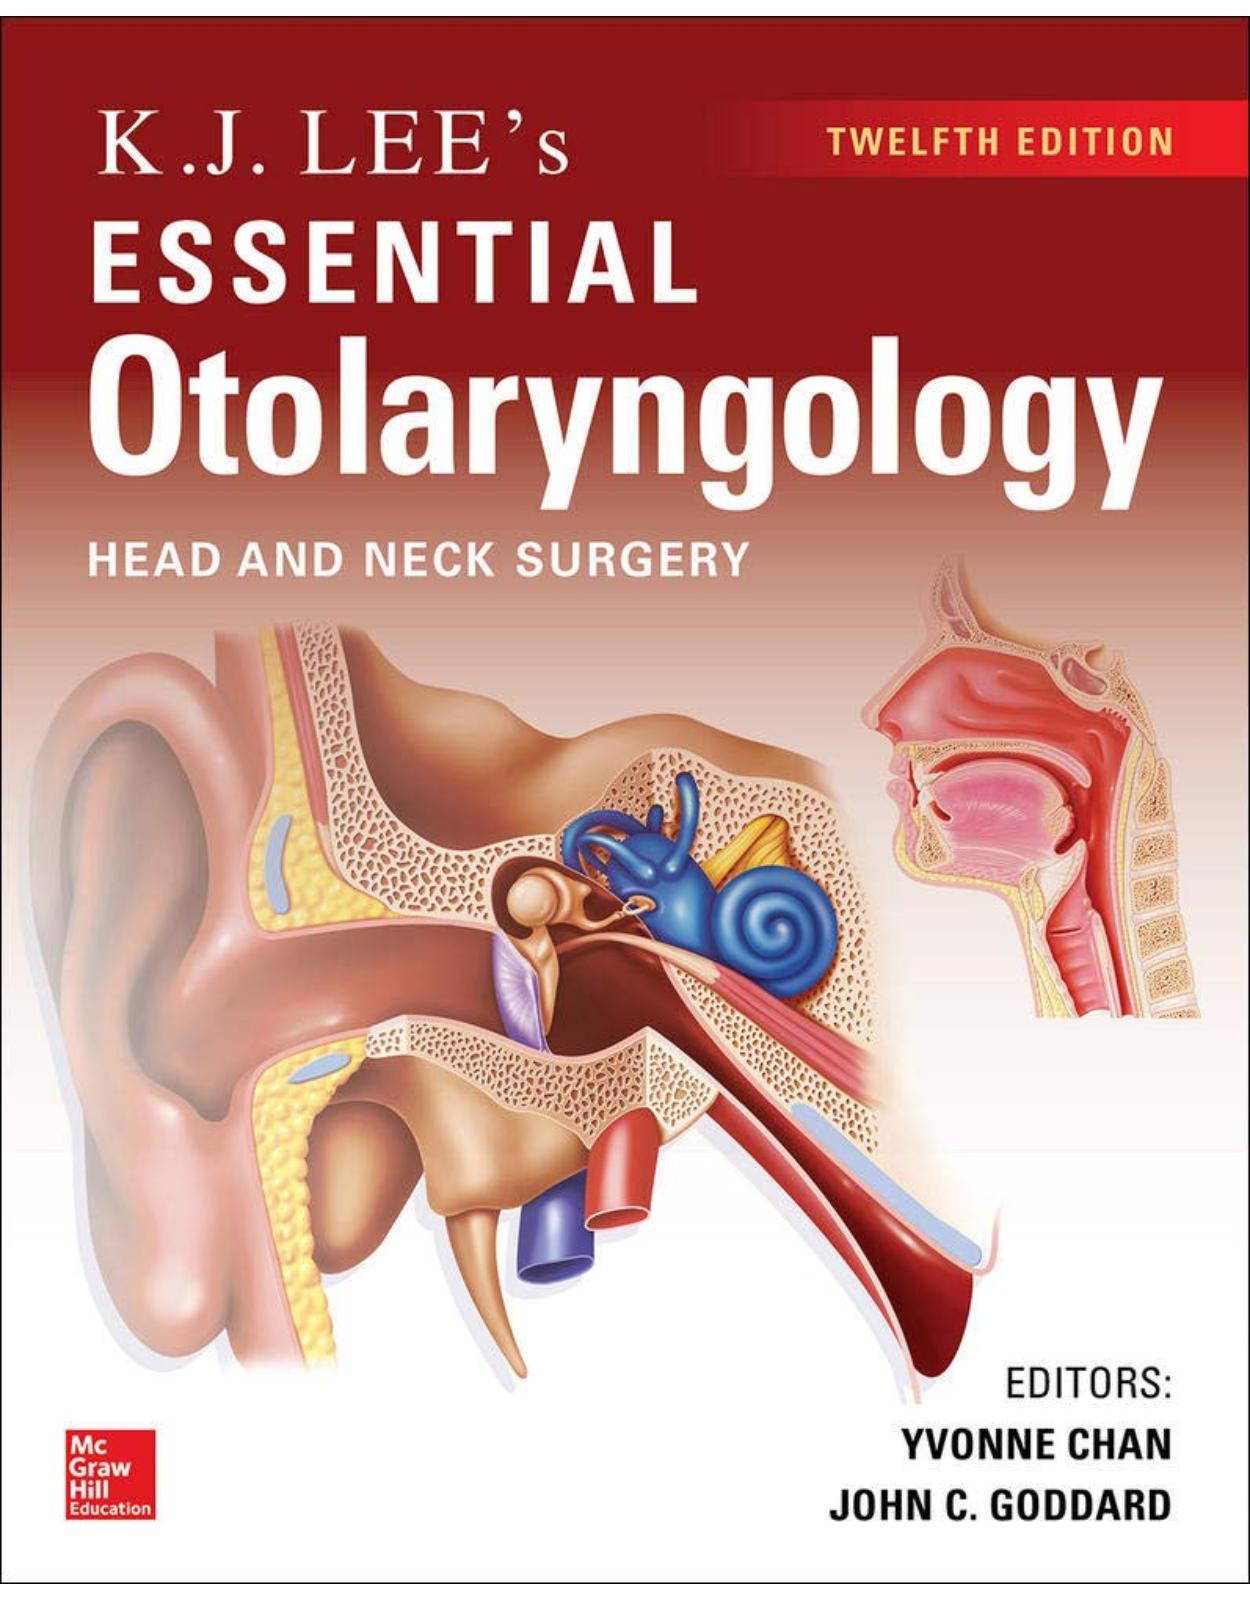 KJ Lee's Essential Otolaryngology, 12th edition 